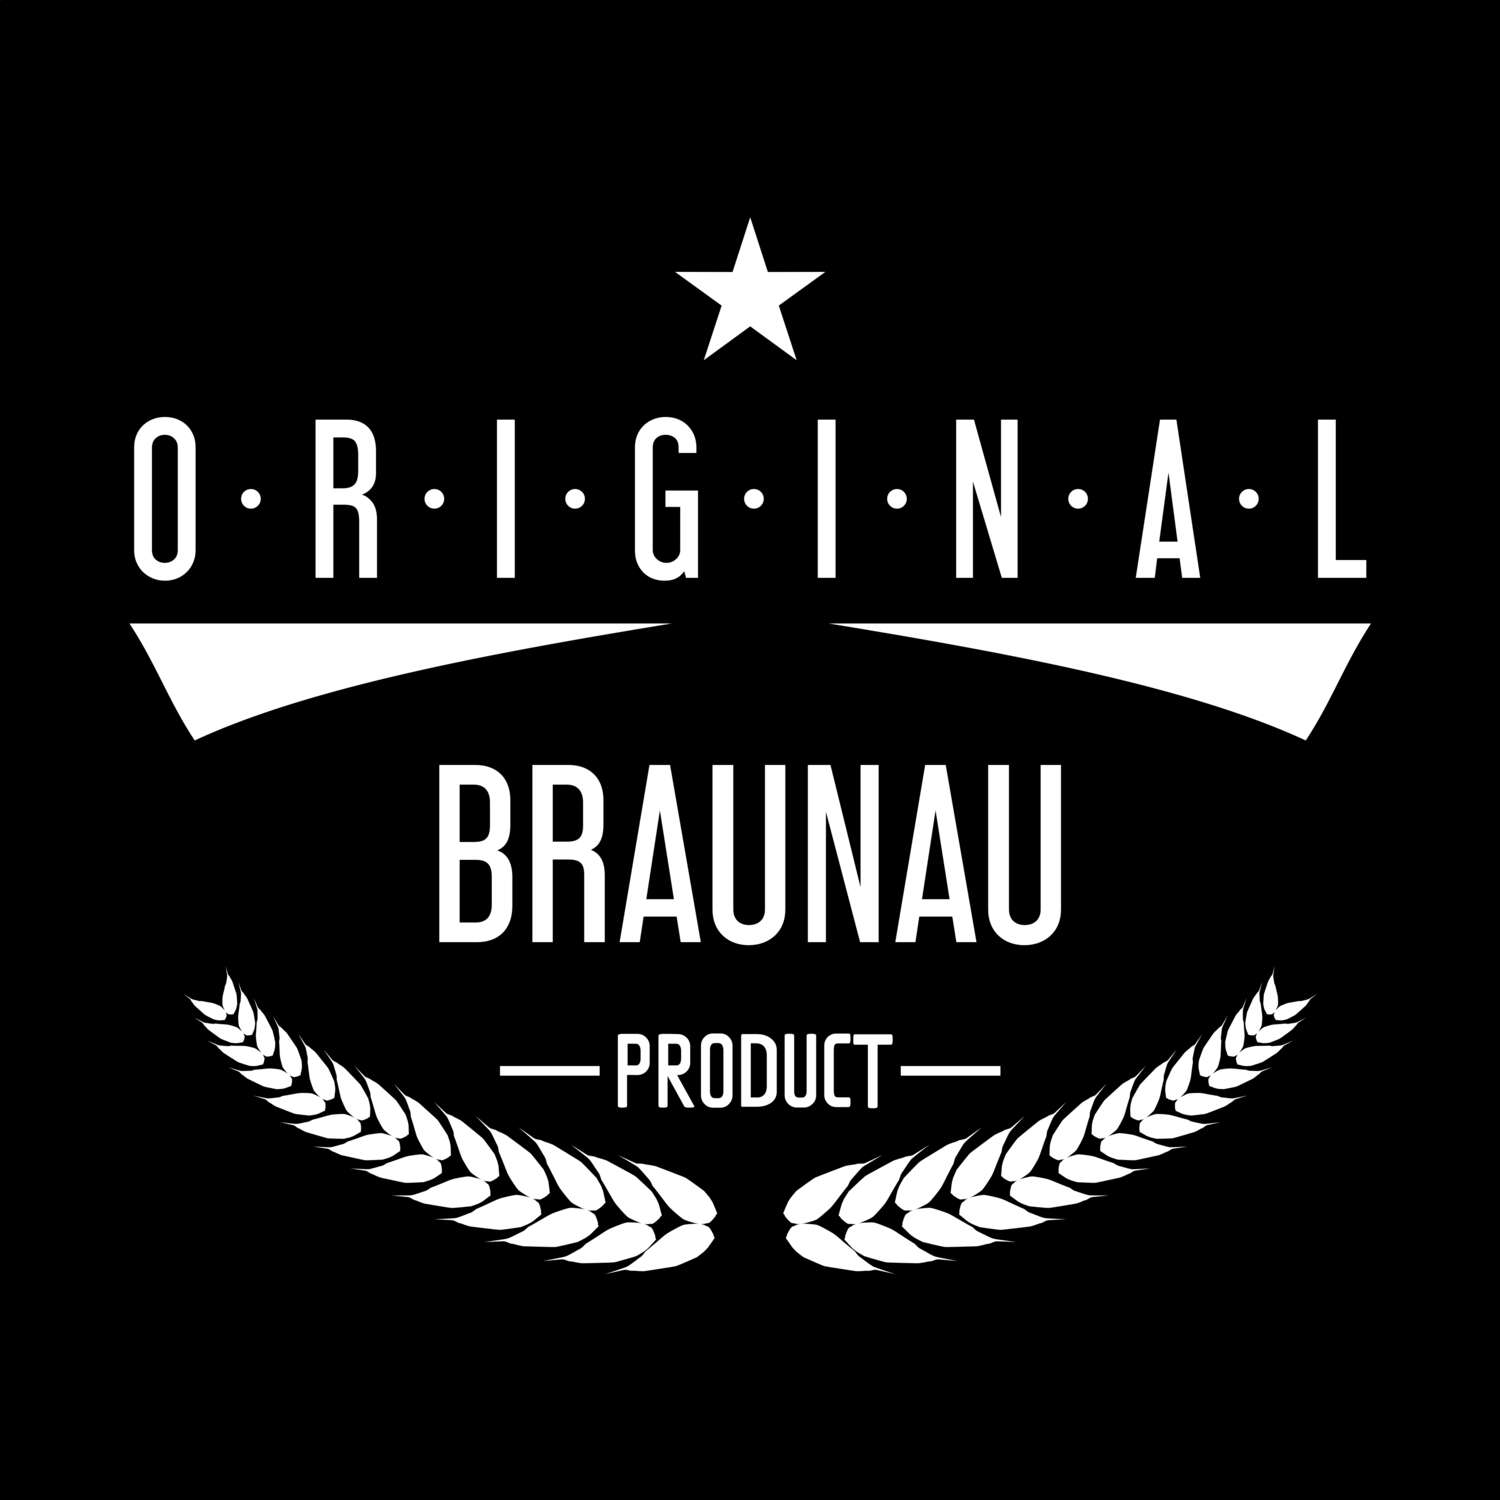 Braunau T-Shirt »Original Product«